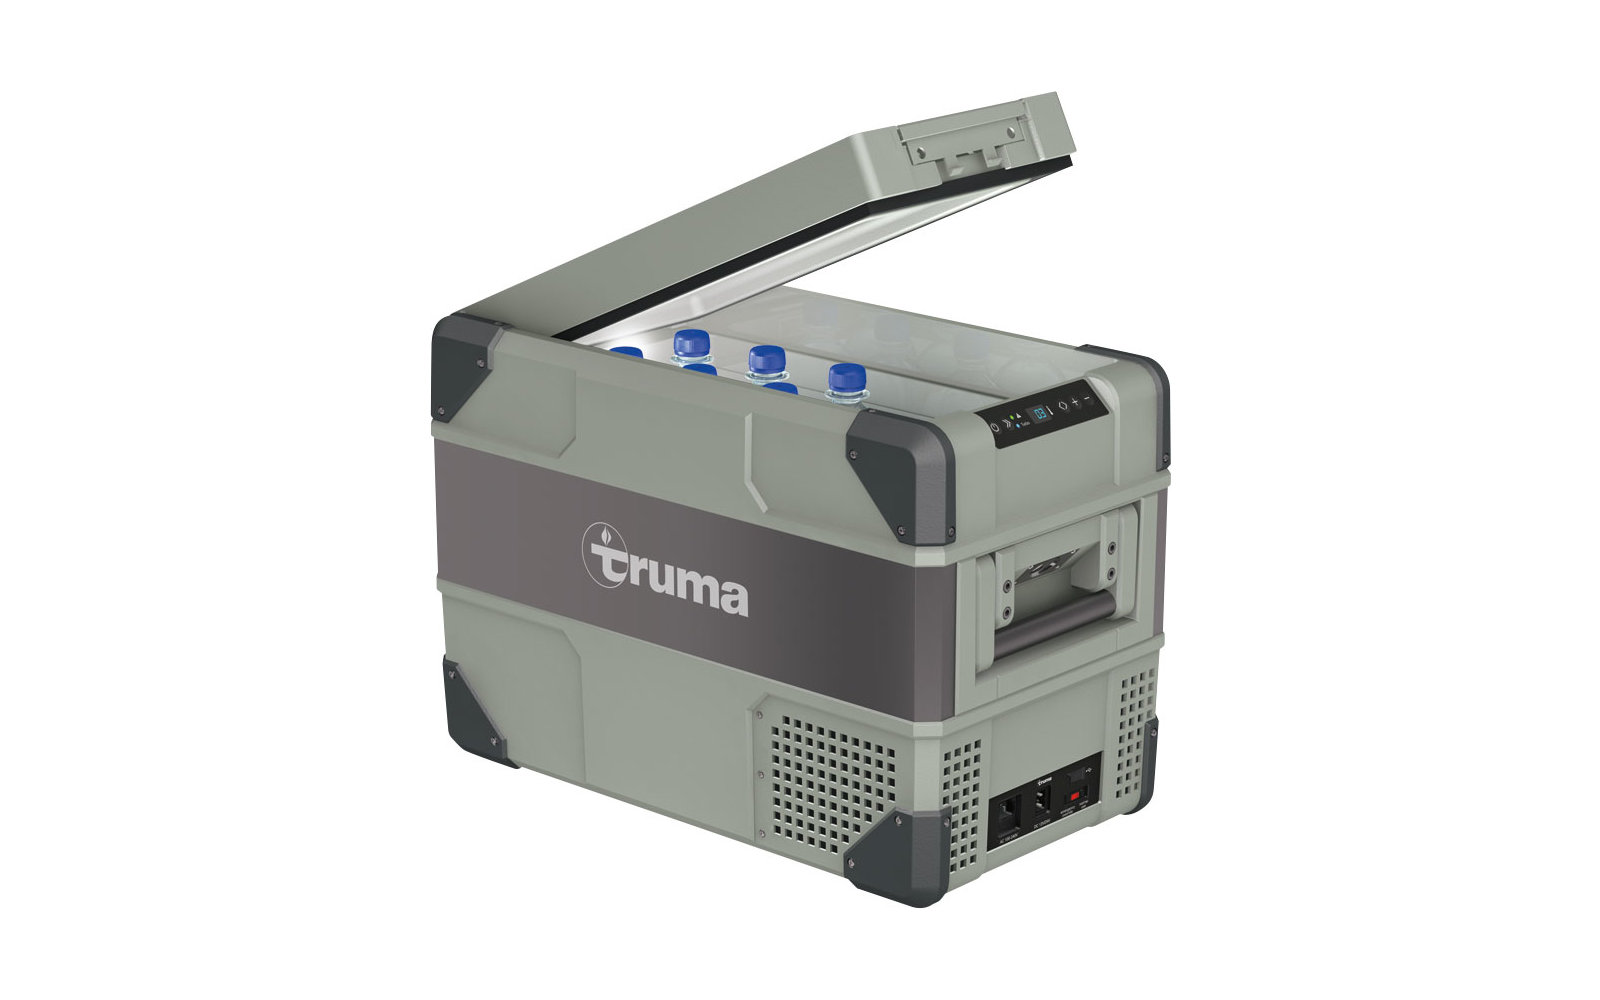   TRUMA Cooler C30 / Single Zone Kompressorkühlbox mit Tiefkühlfunktion / 30 Liter